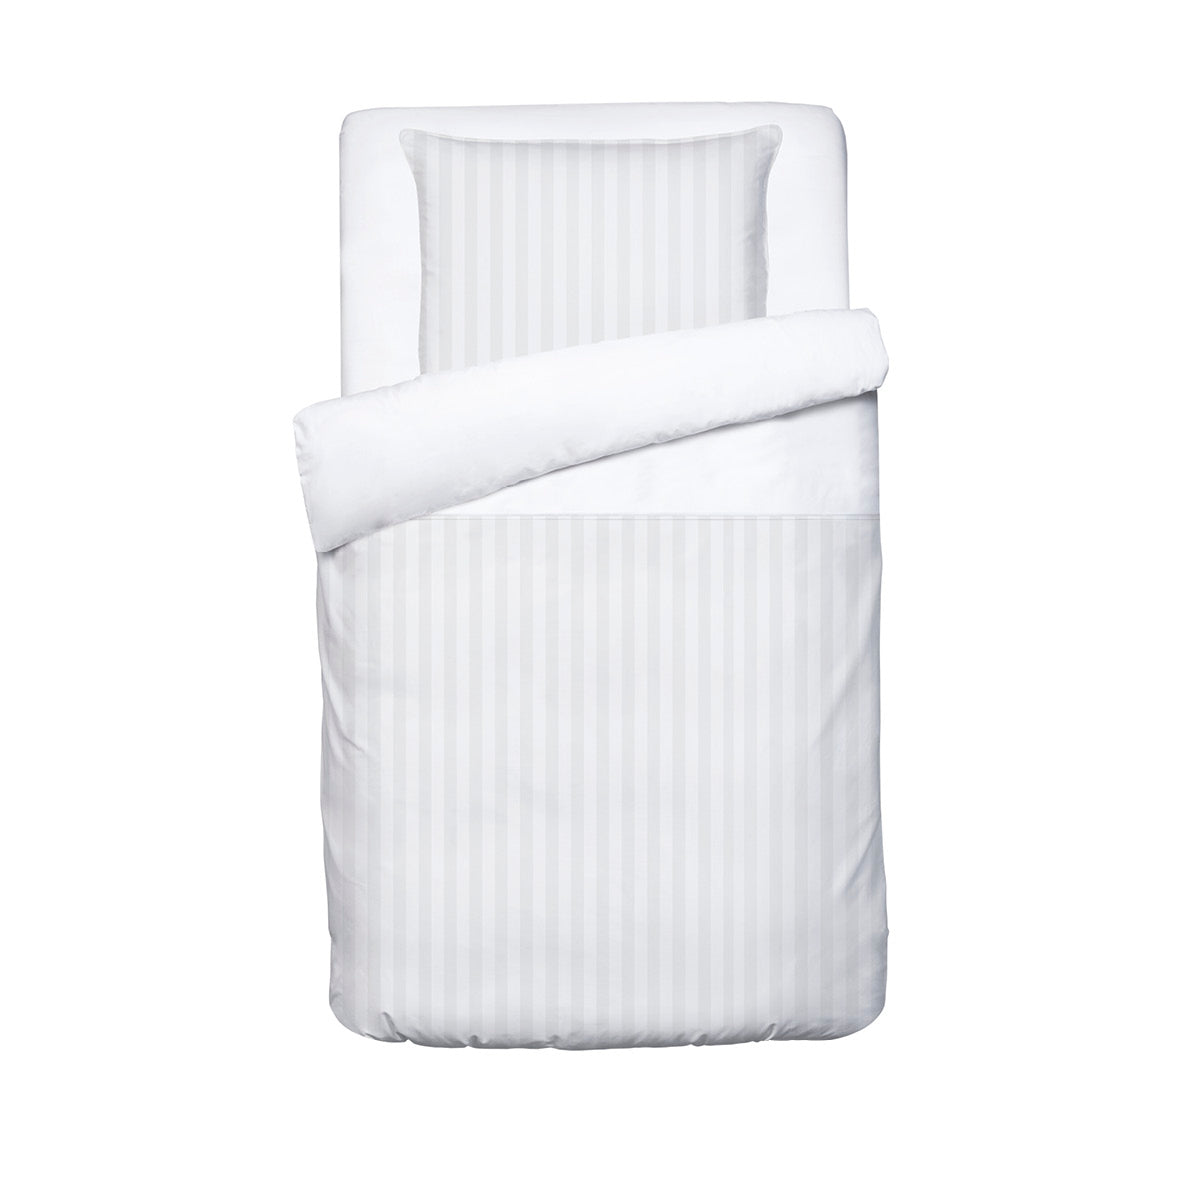 Duvet cover + pillowcase(s) baby cotton satin -Jacquard woven - Dobby stripe White